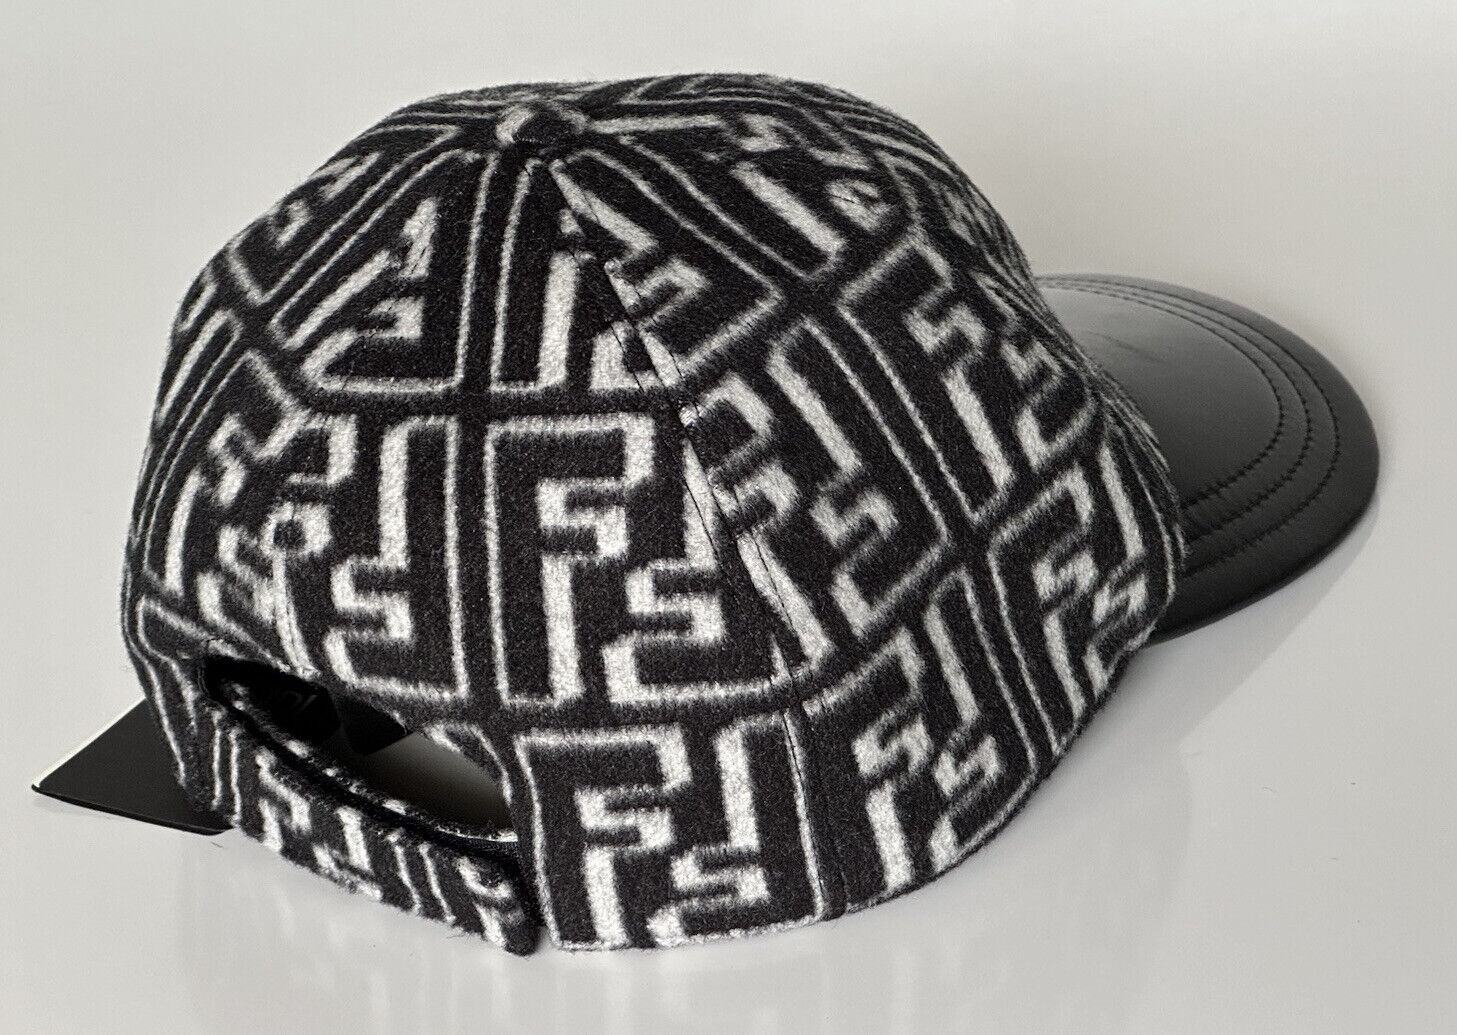 NWT $790 Fendi All-Over FF Motif Black/White Wool Baseball Cap Hat Italy FXQ768